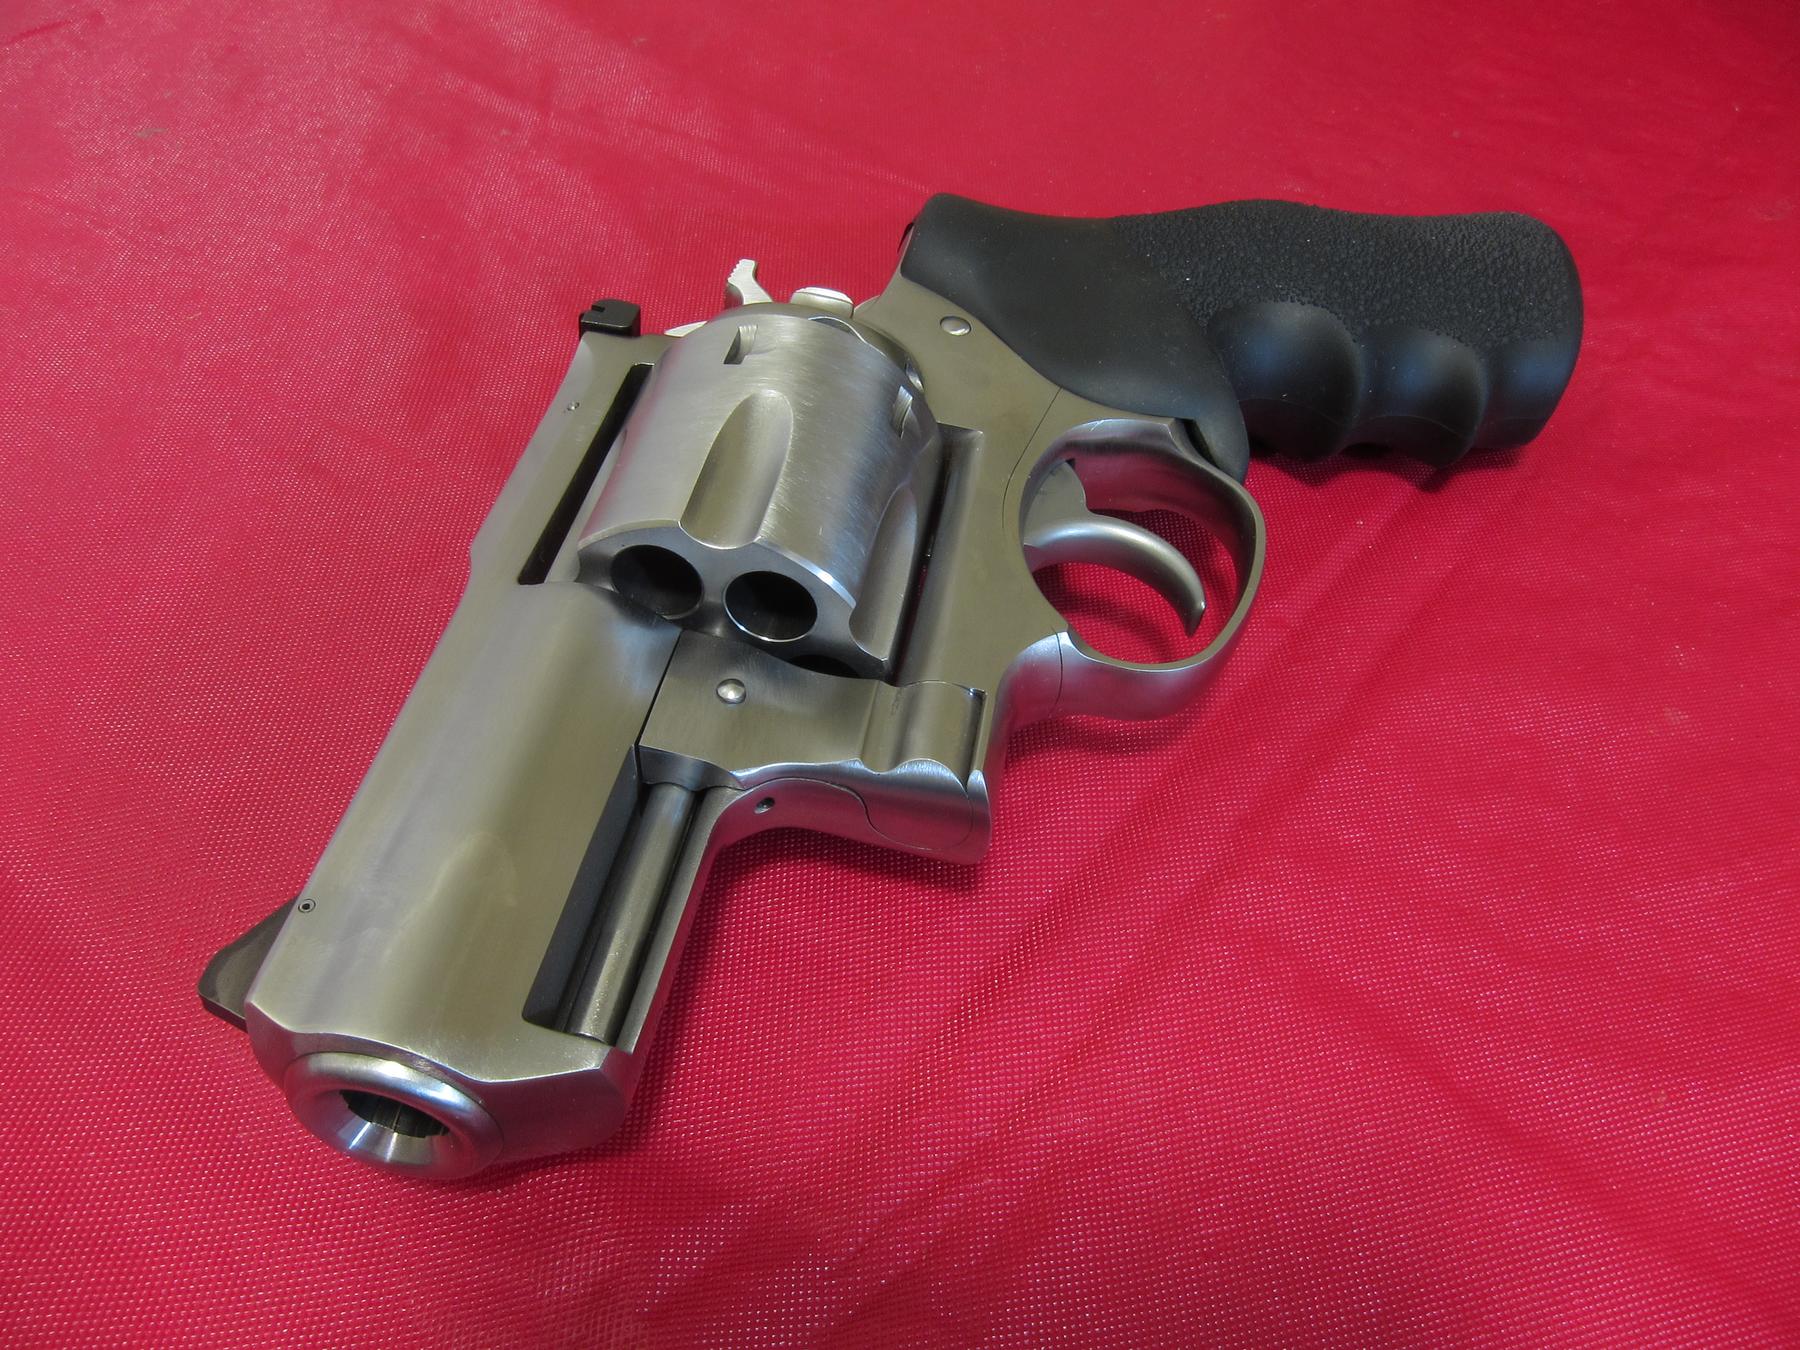 a silver and black gun with a black gun - File:Ruger Super Redhawk Alaskan in 44 Magnum.JPG